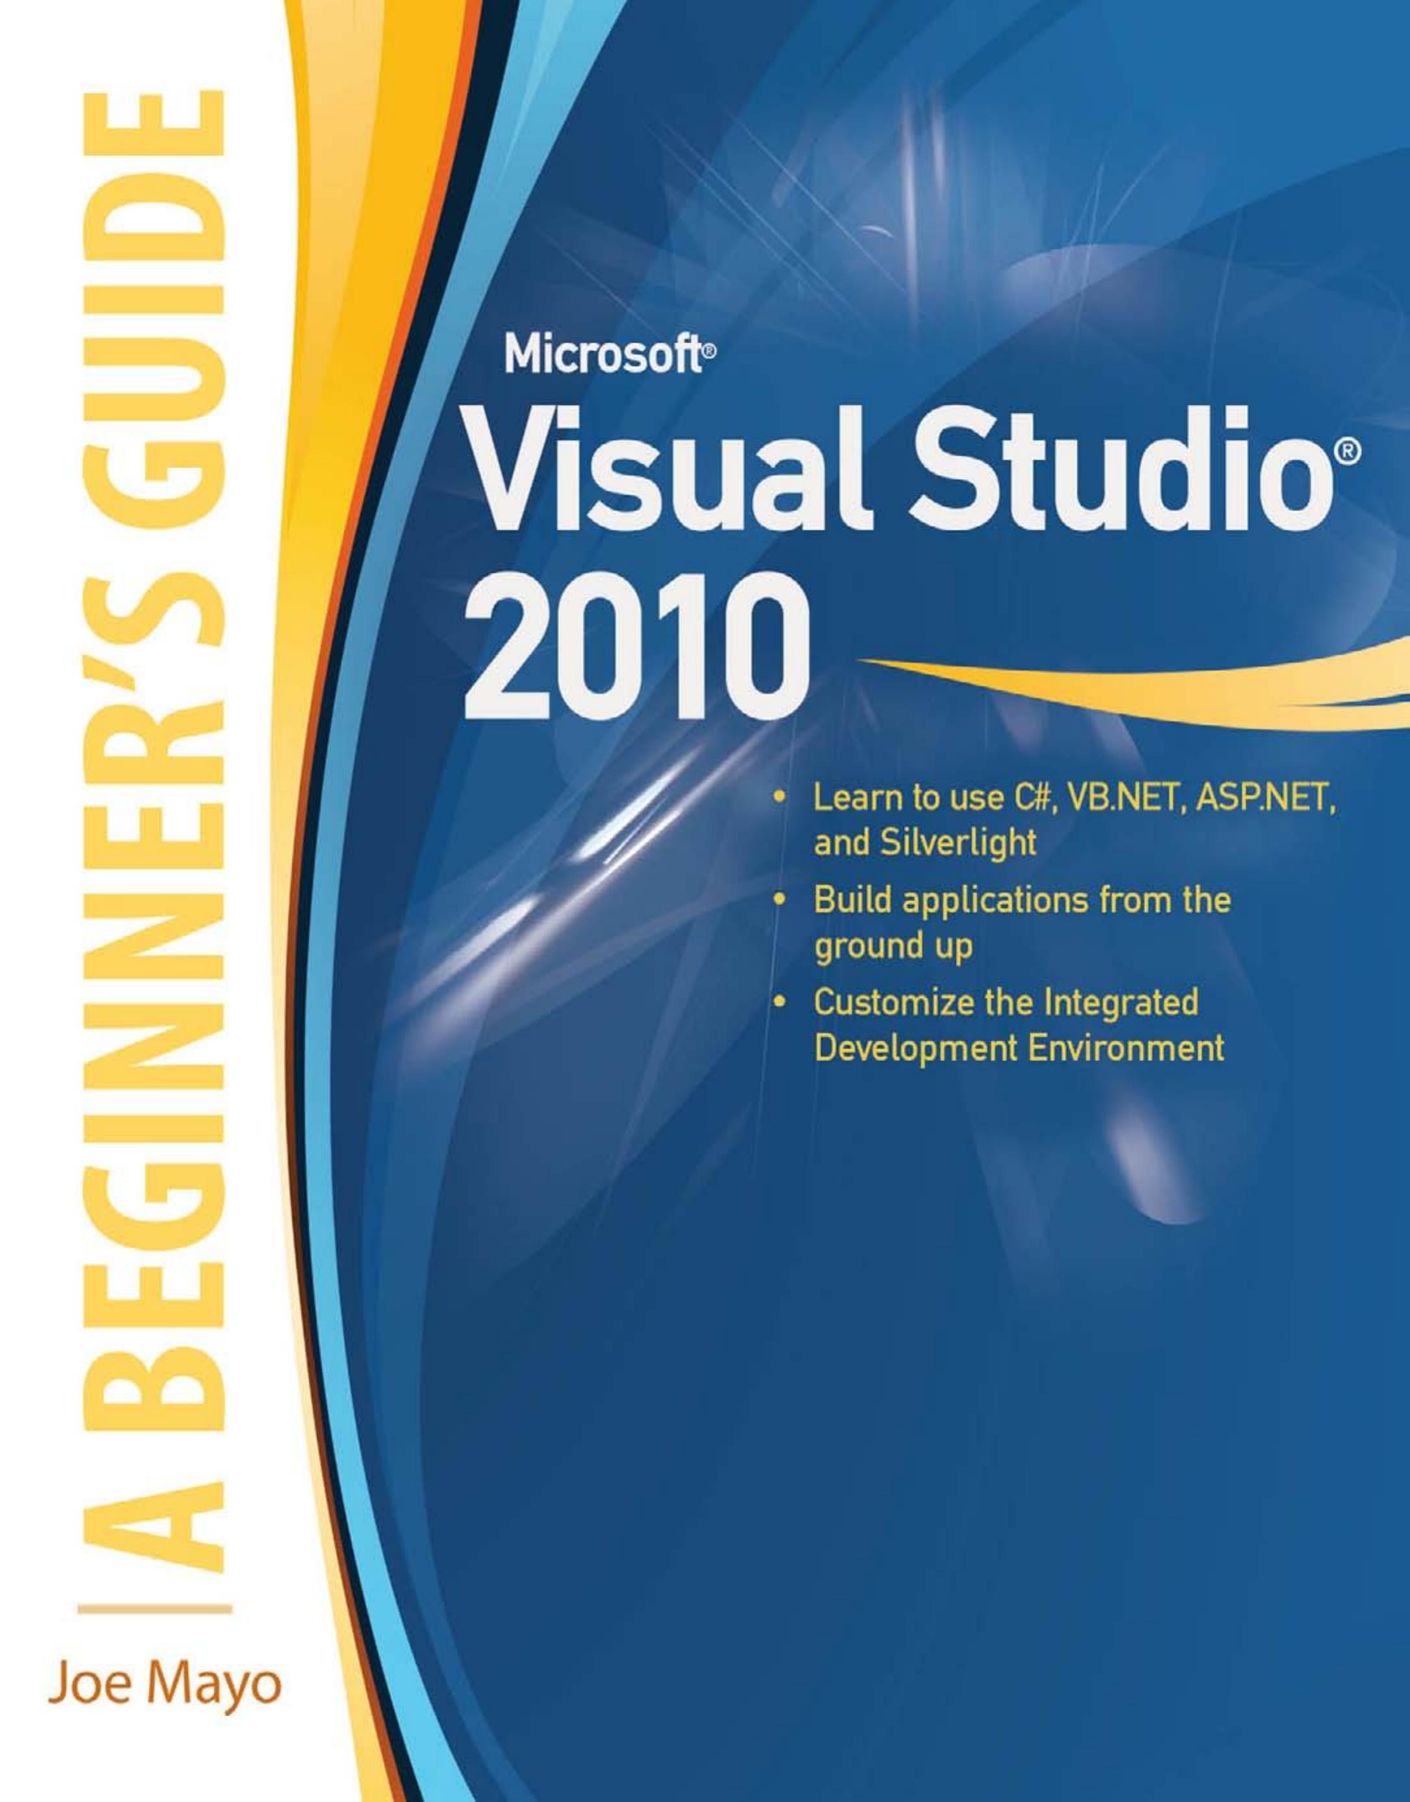 Microsoft 9GD00001 Computer Accessories User Manual